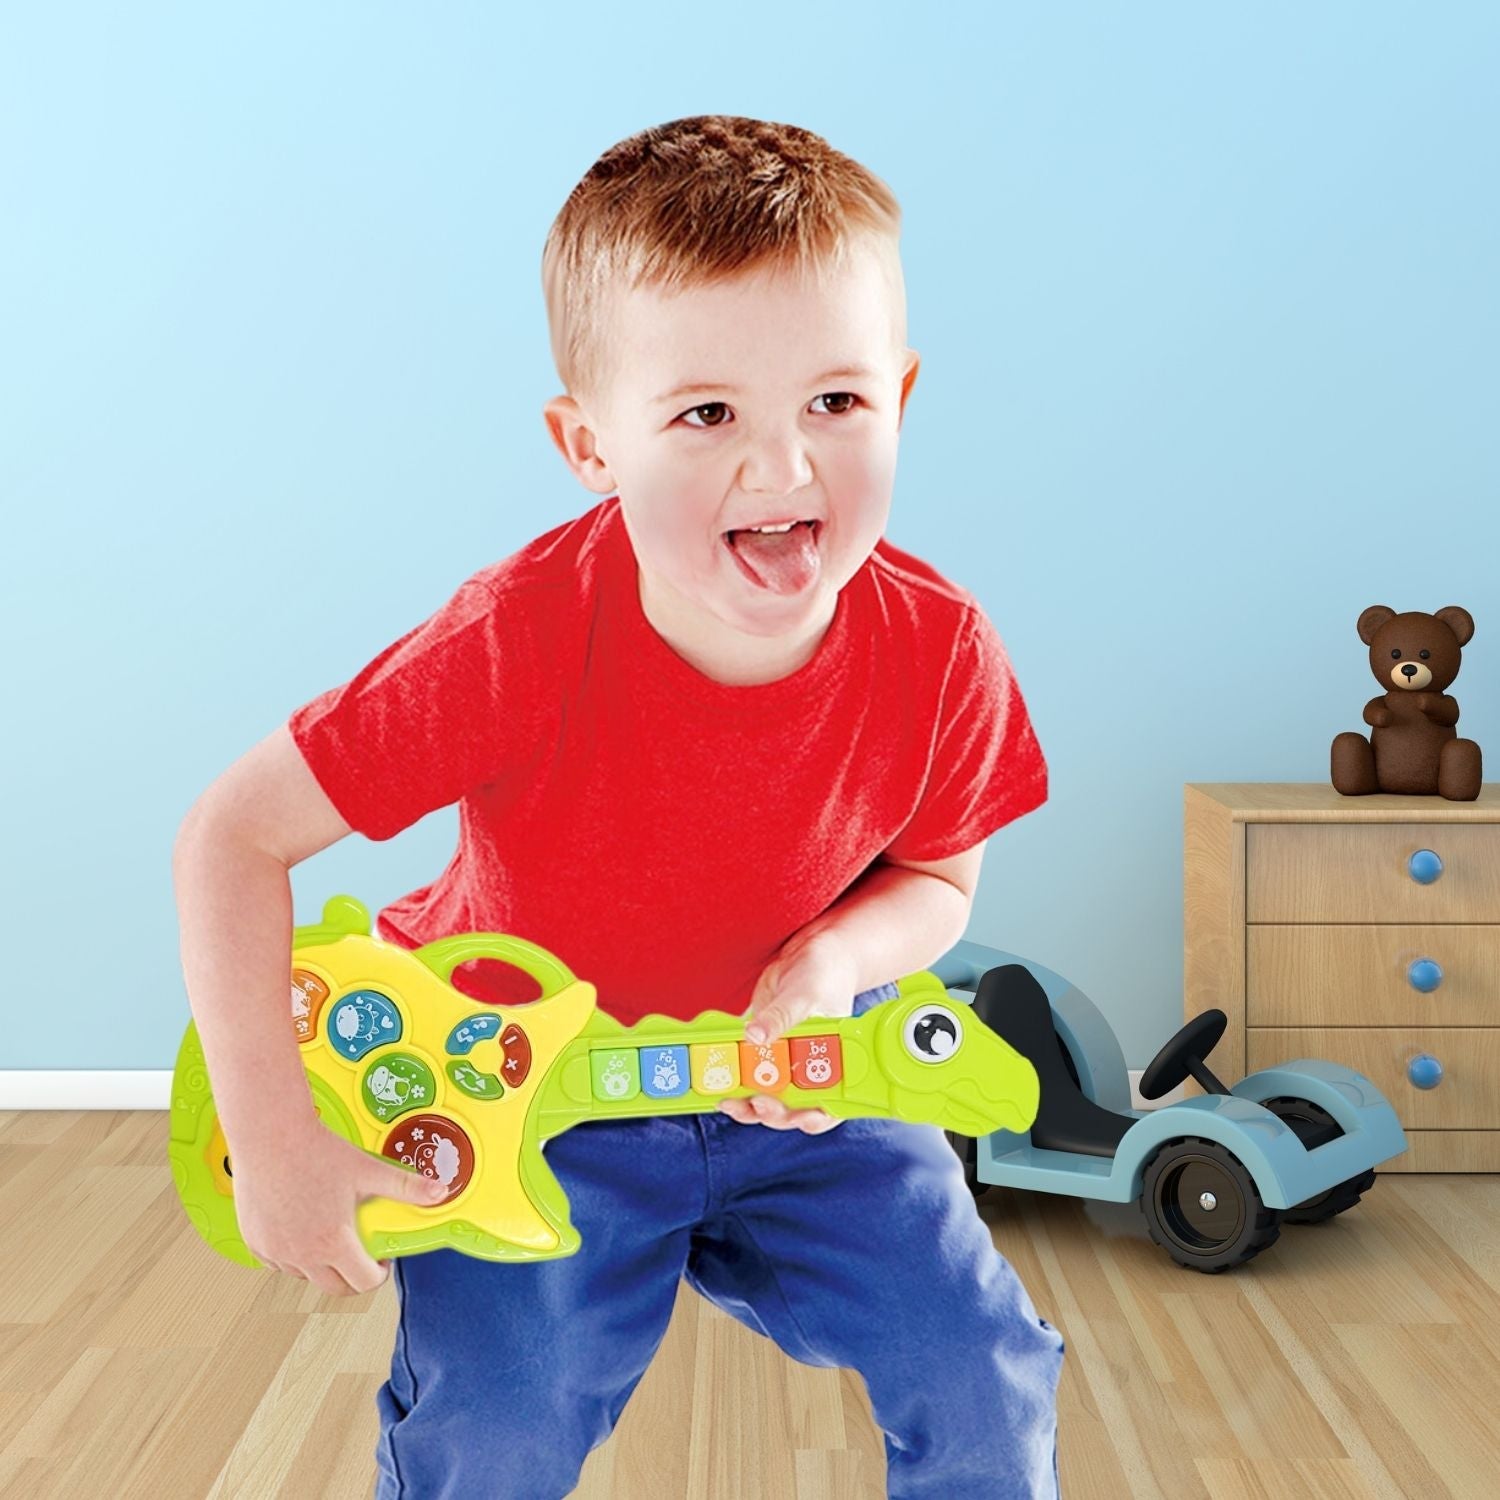 Kids Musical Guitar Toys with Dinosaur Shape Design (Green) - Little Kids Business